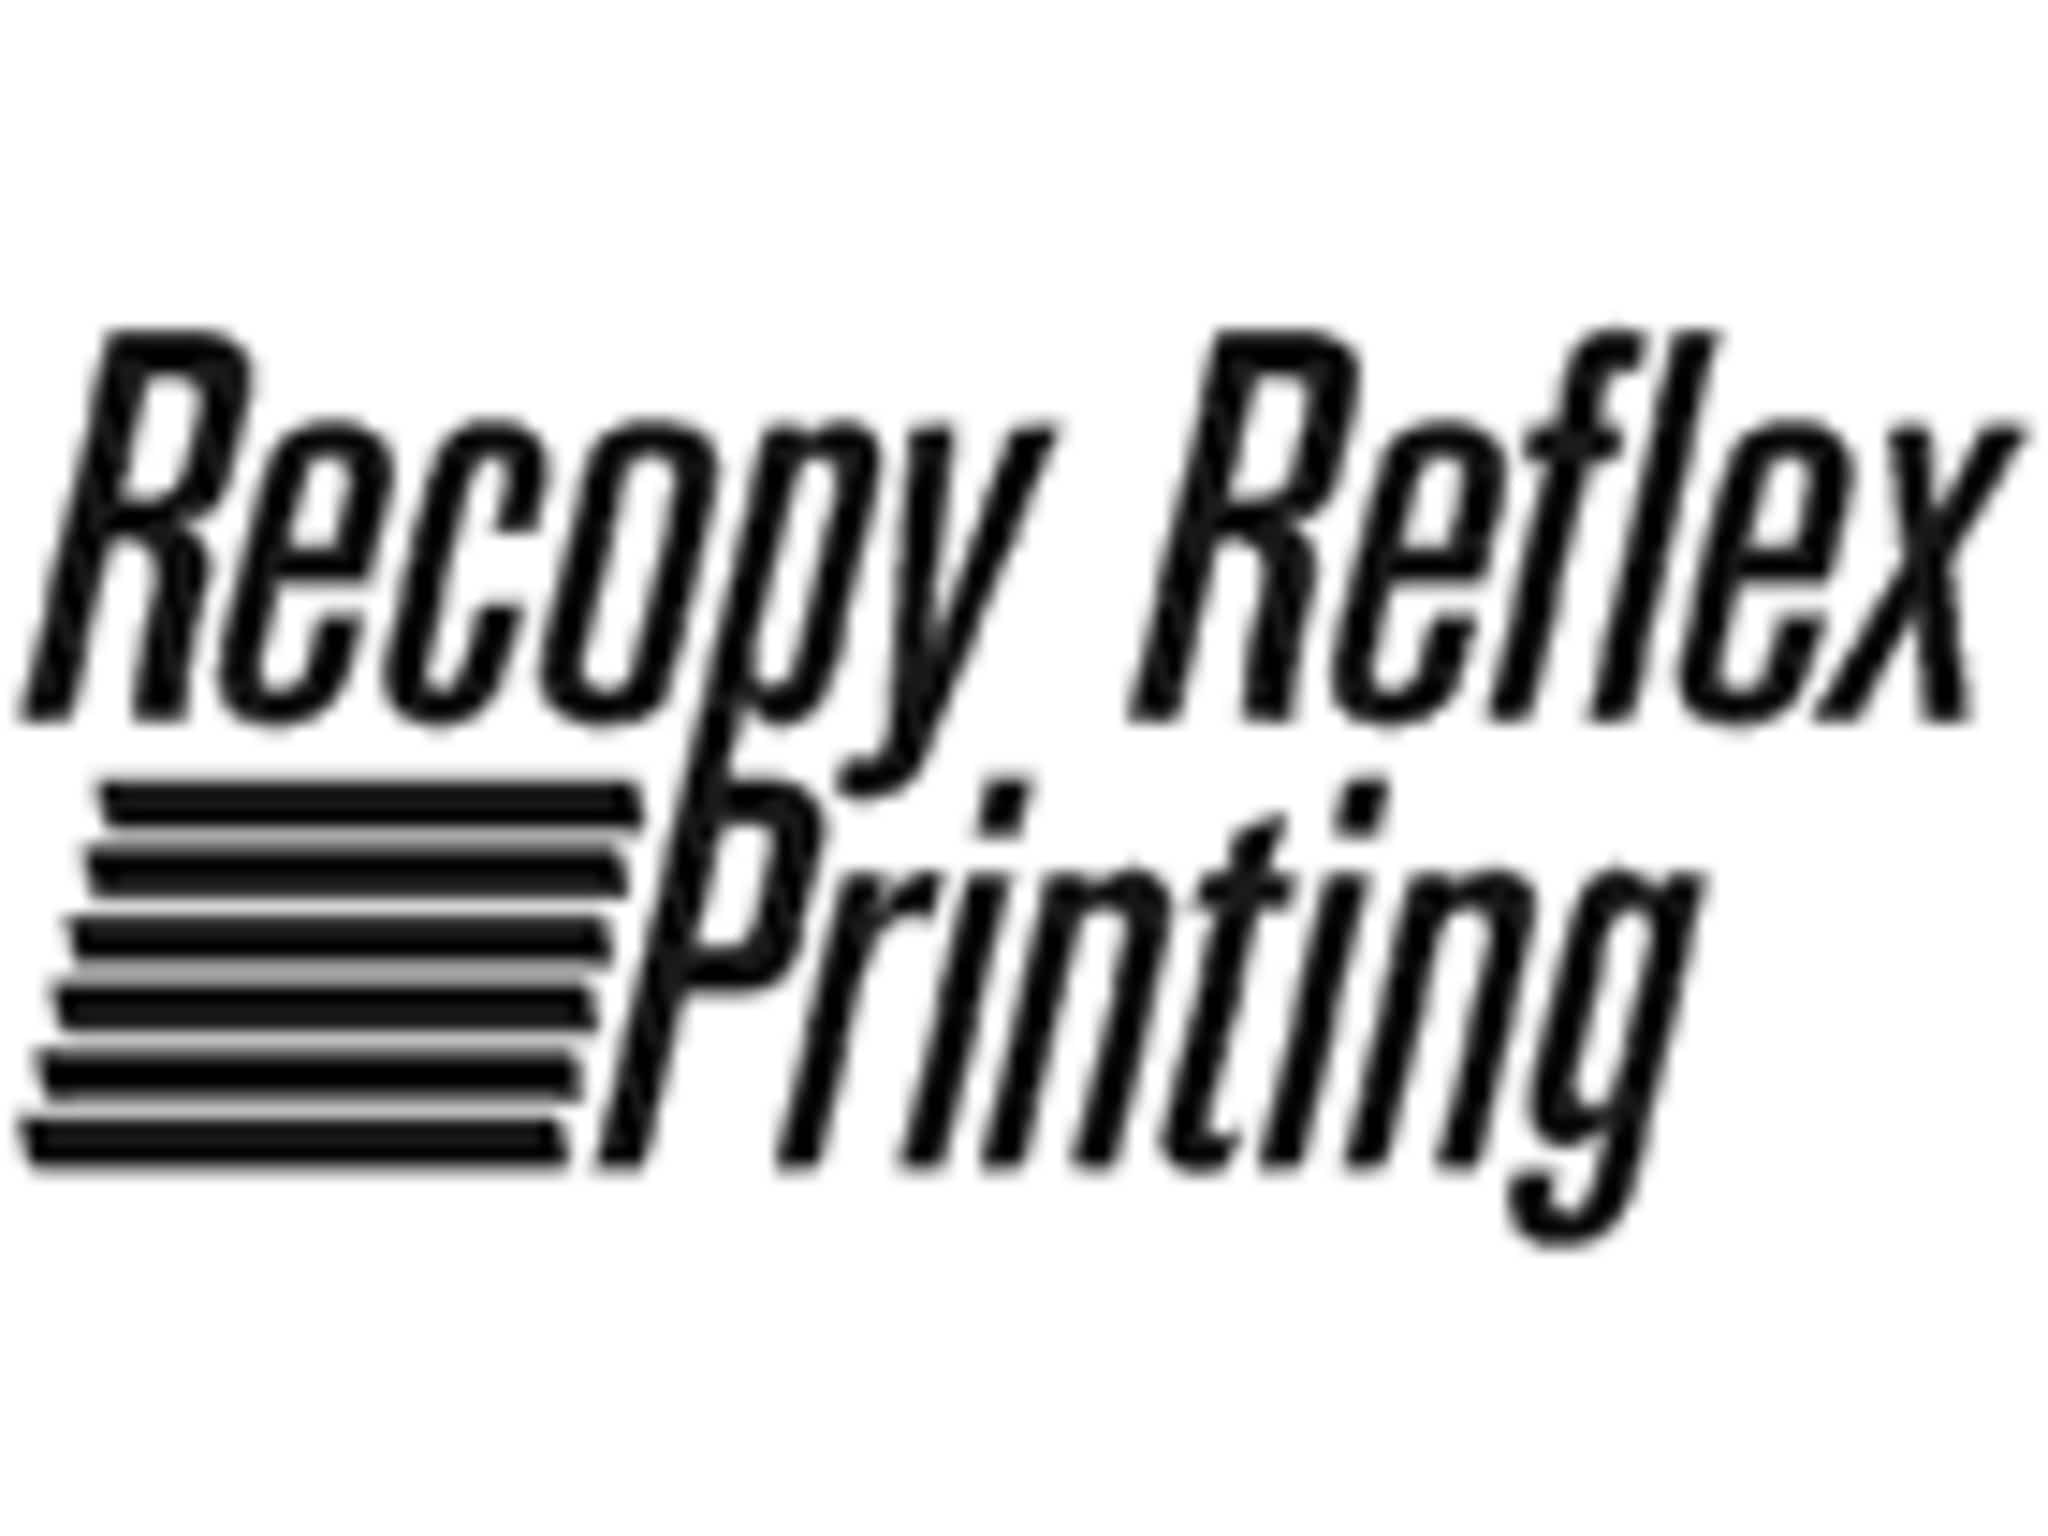 photo Recopy Reflex Printing